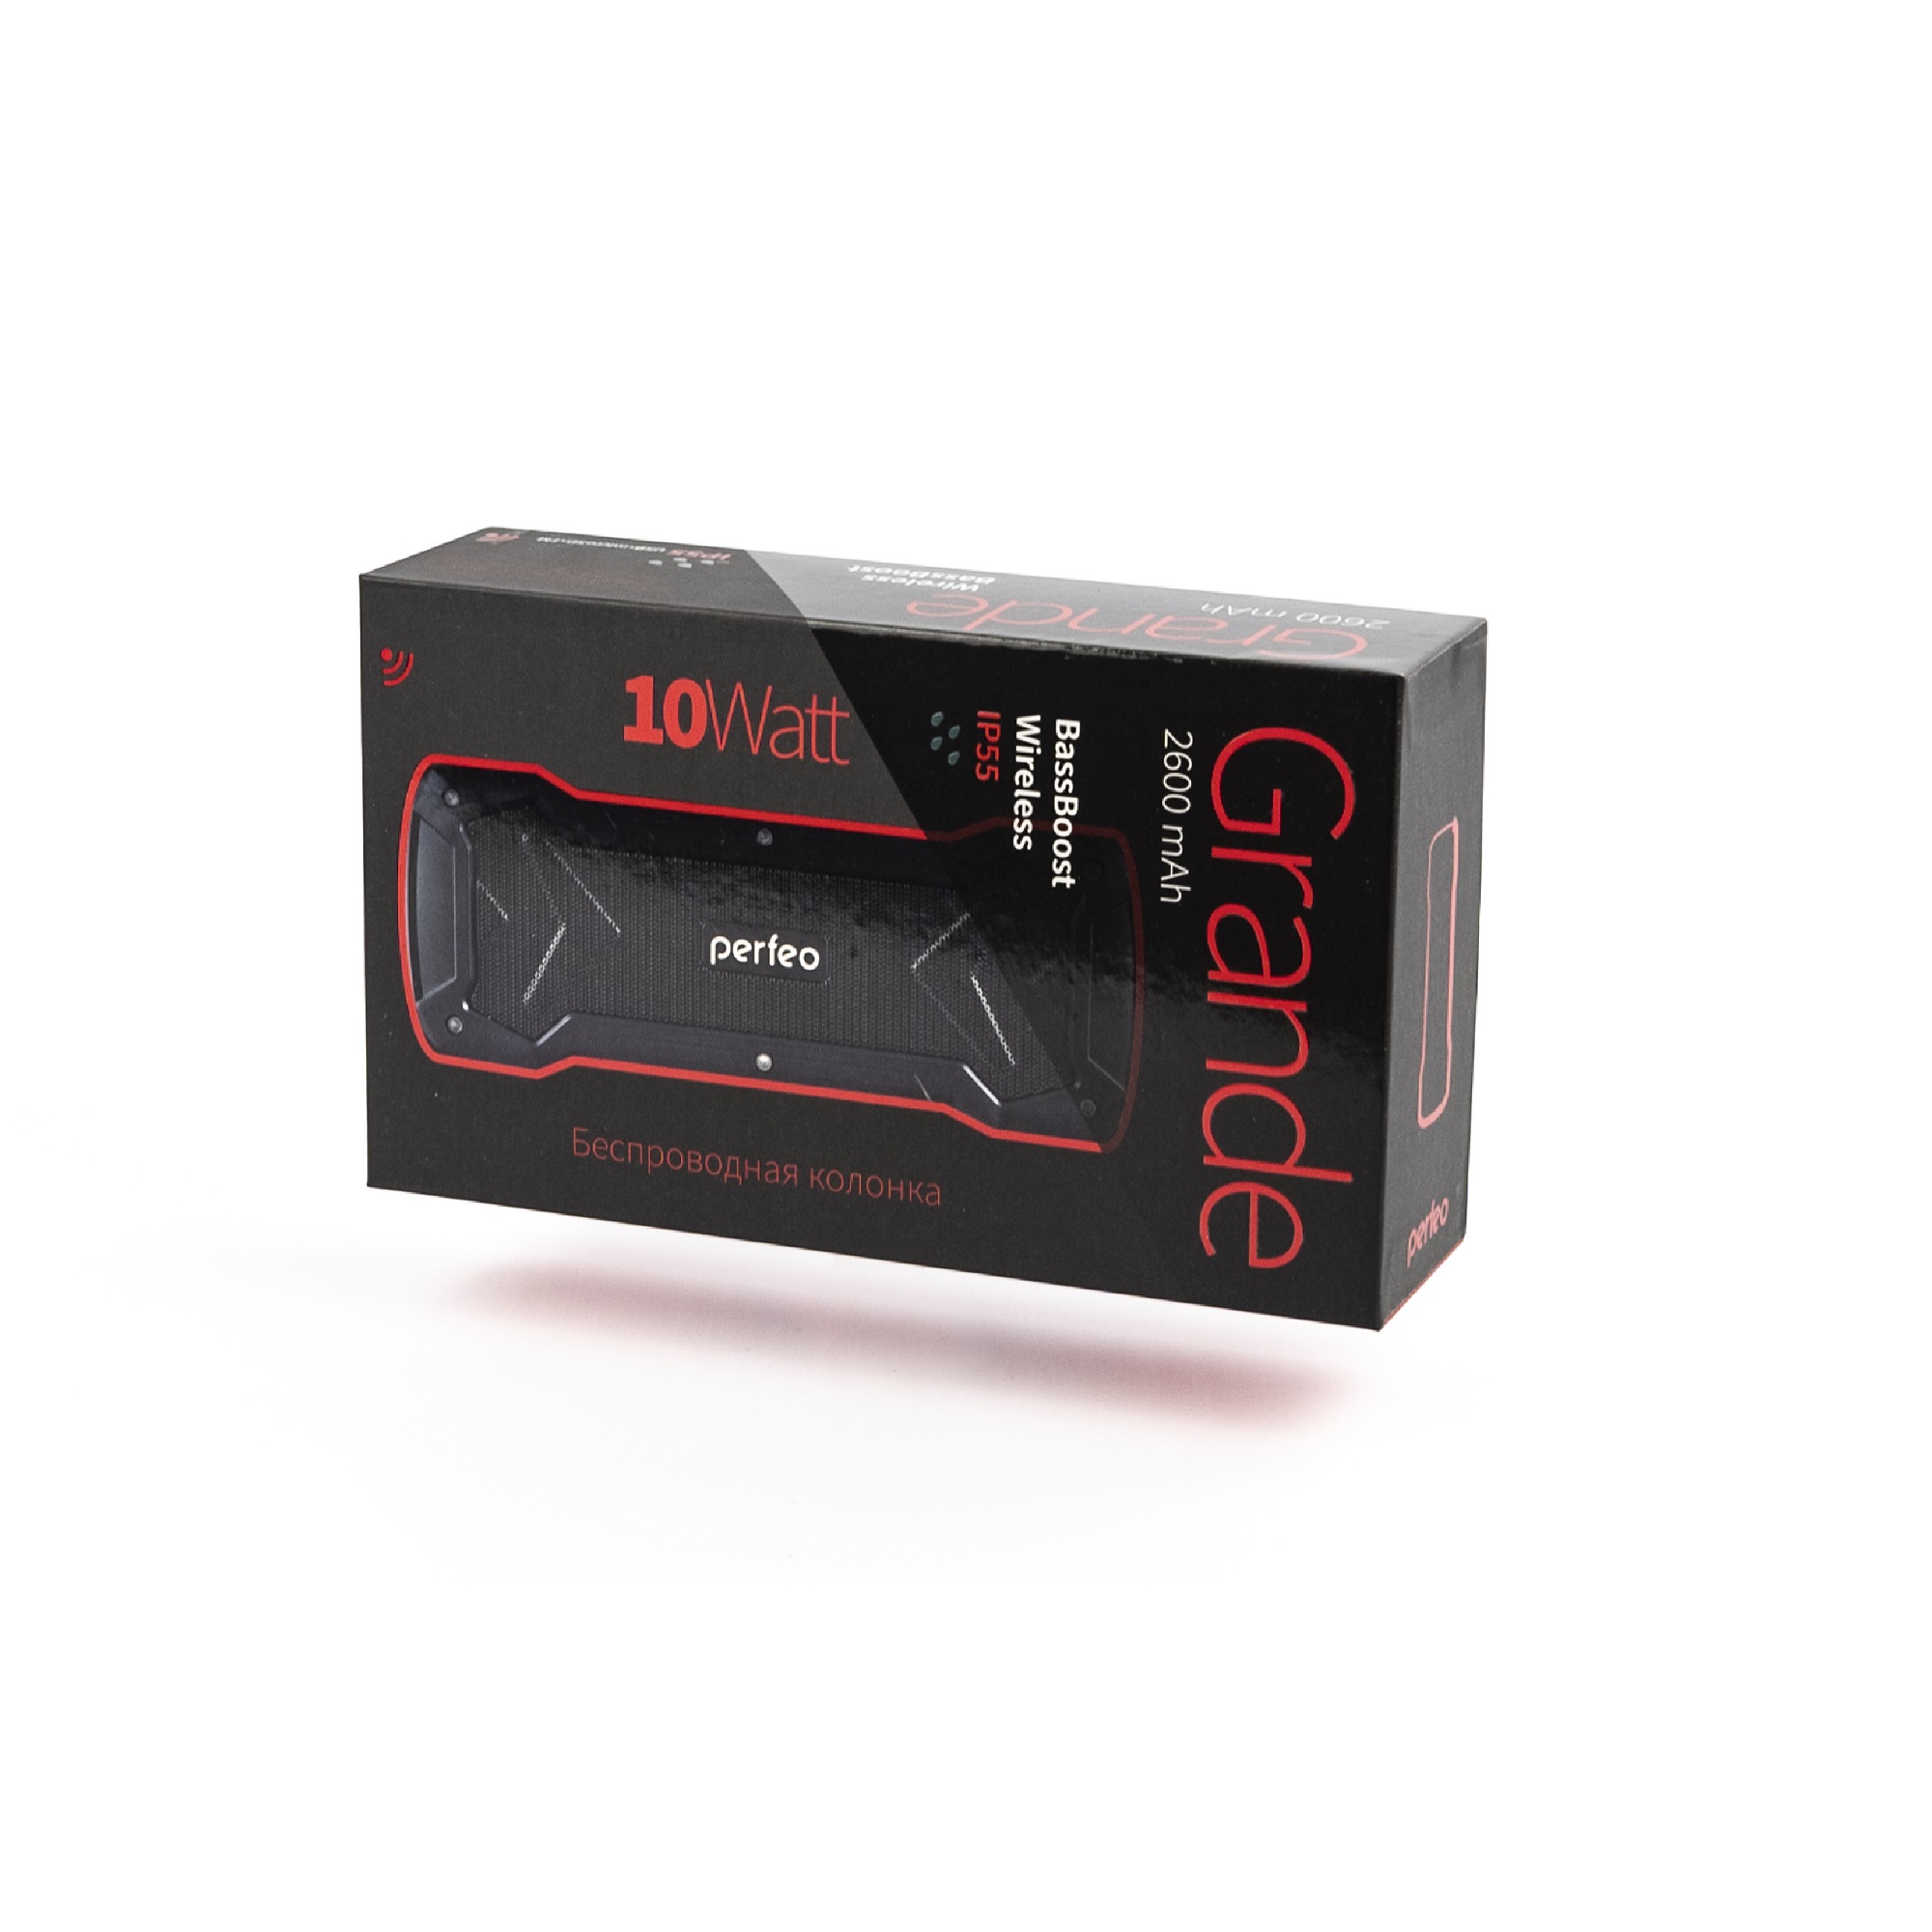 Беспроводная колонка Perfeo GRANDE FM MP3 microSD AUX мощность 10Вт 2600mAh черная PF 5207 - фото 6